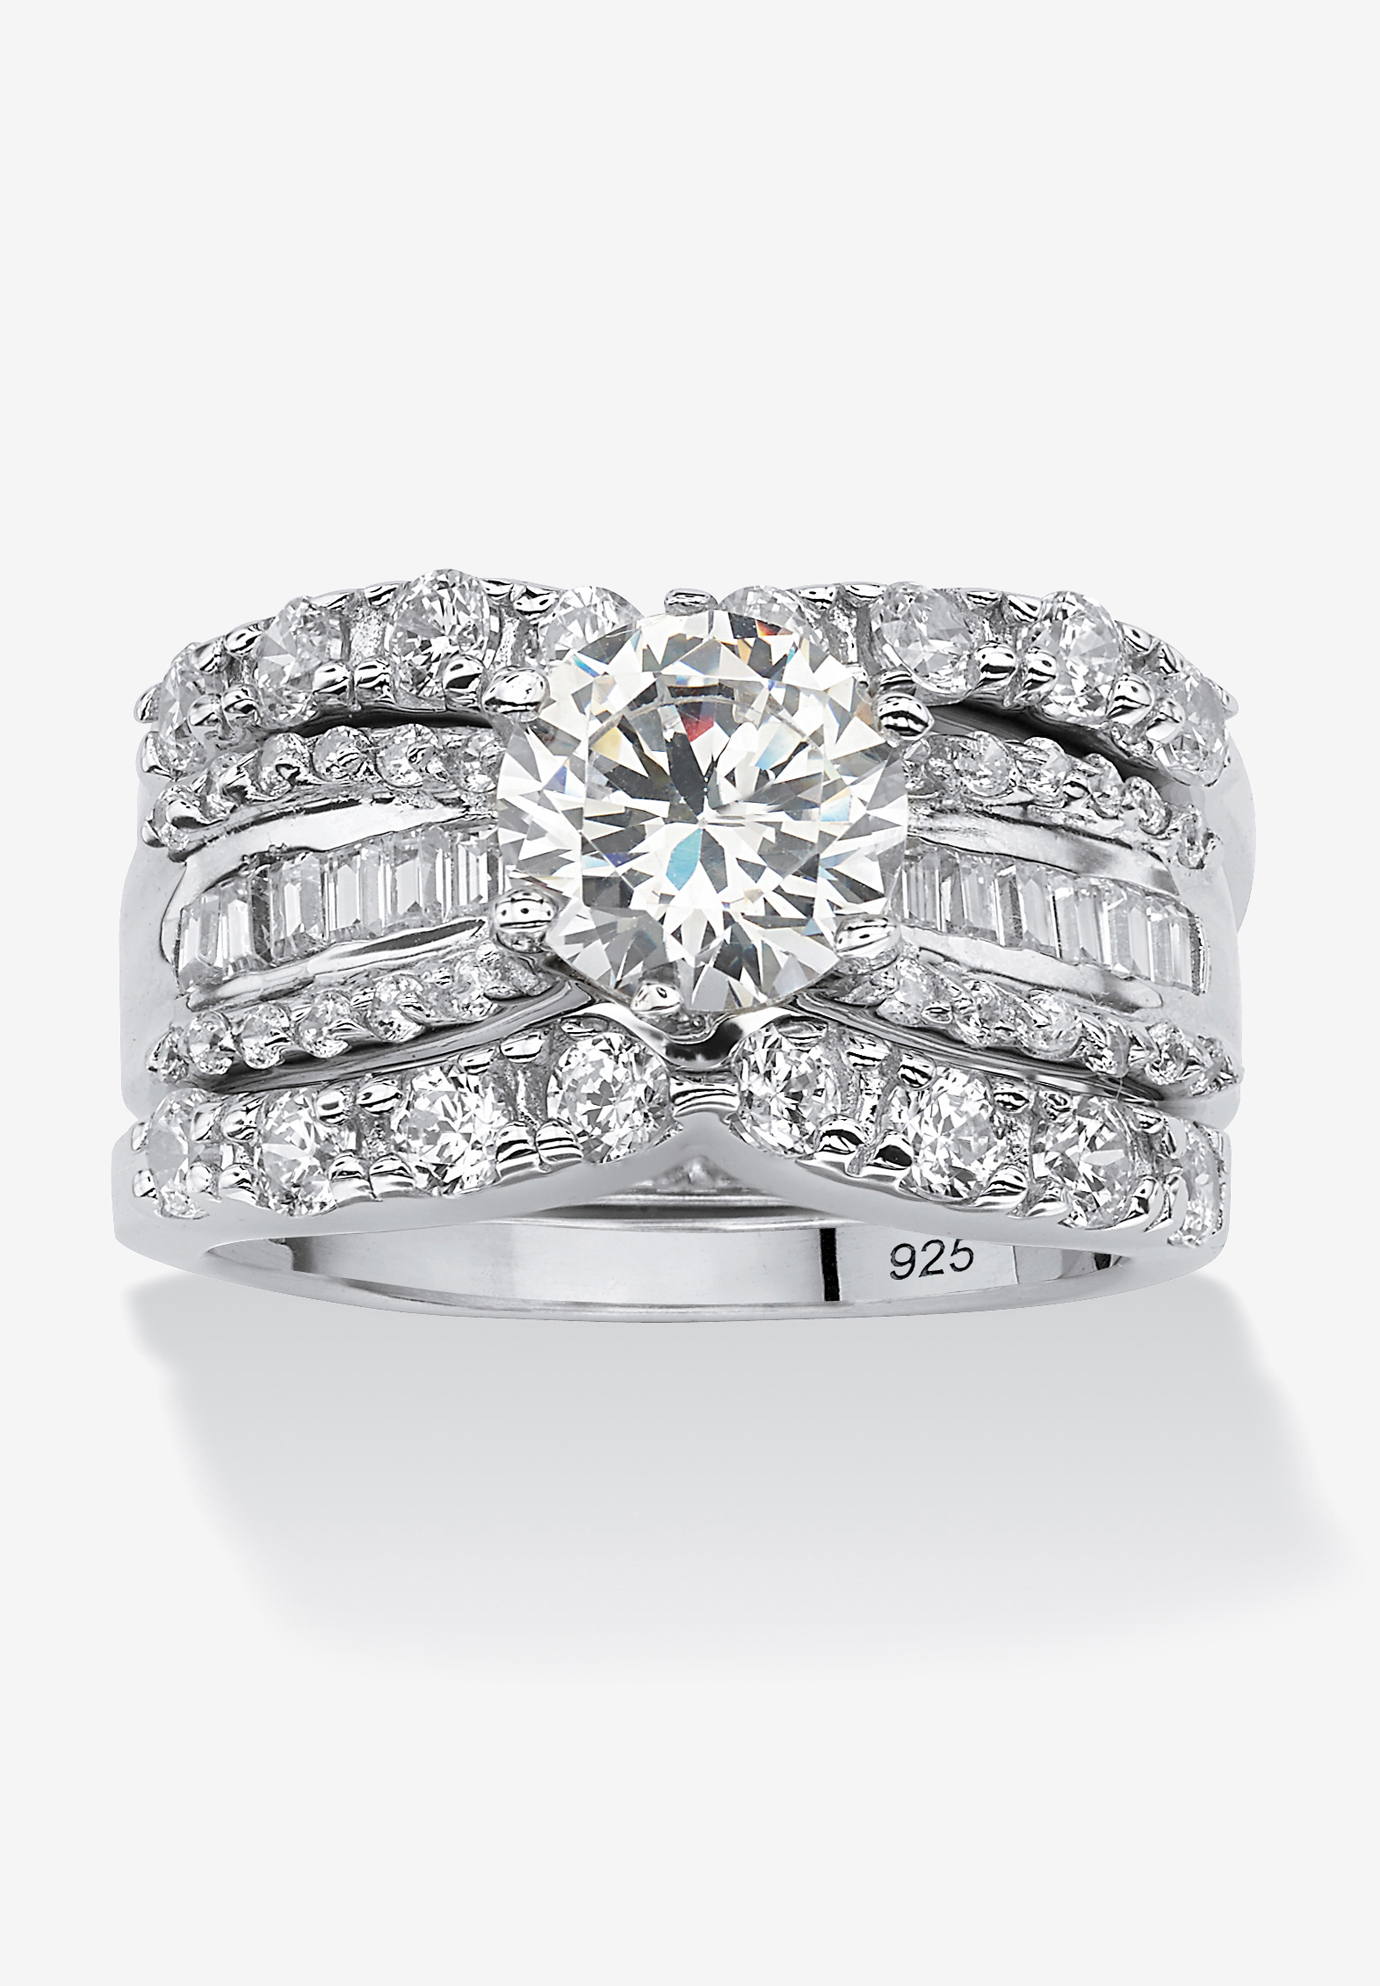 Platinum over Silver Bridal Ring Set Cubic Zirconia (5 5/8 cttw TDW), 